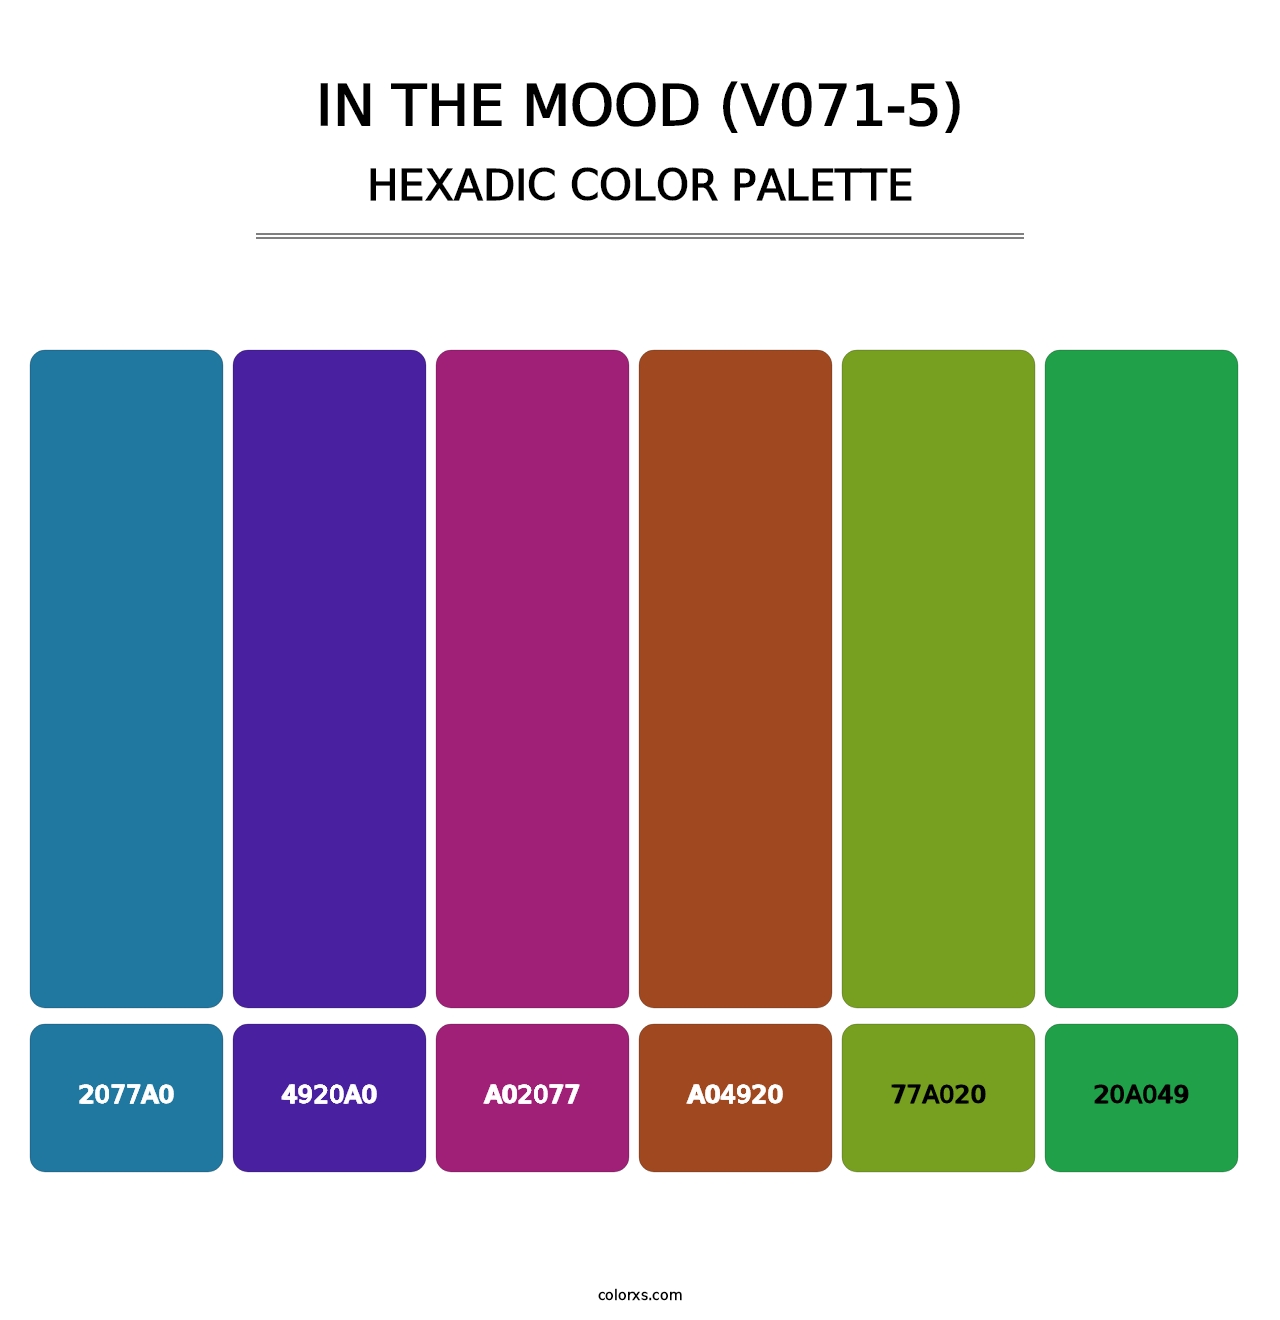 In the Mood (V071-5) - Hexadic Color Palette